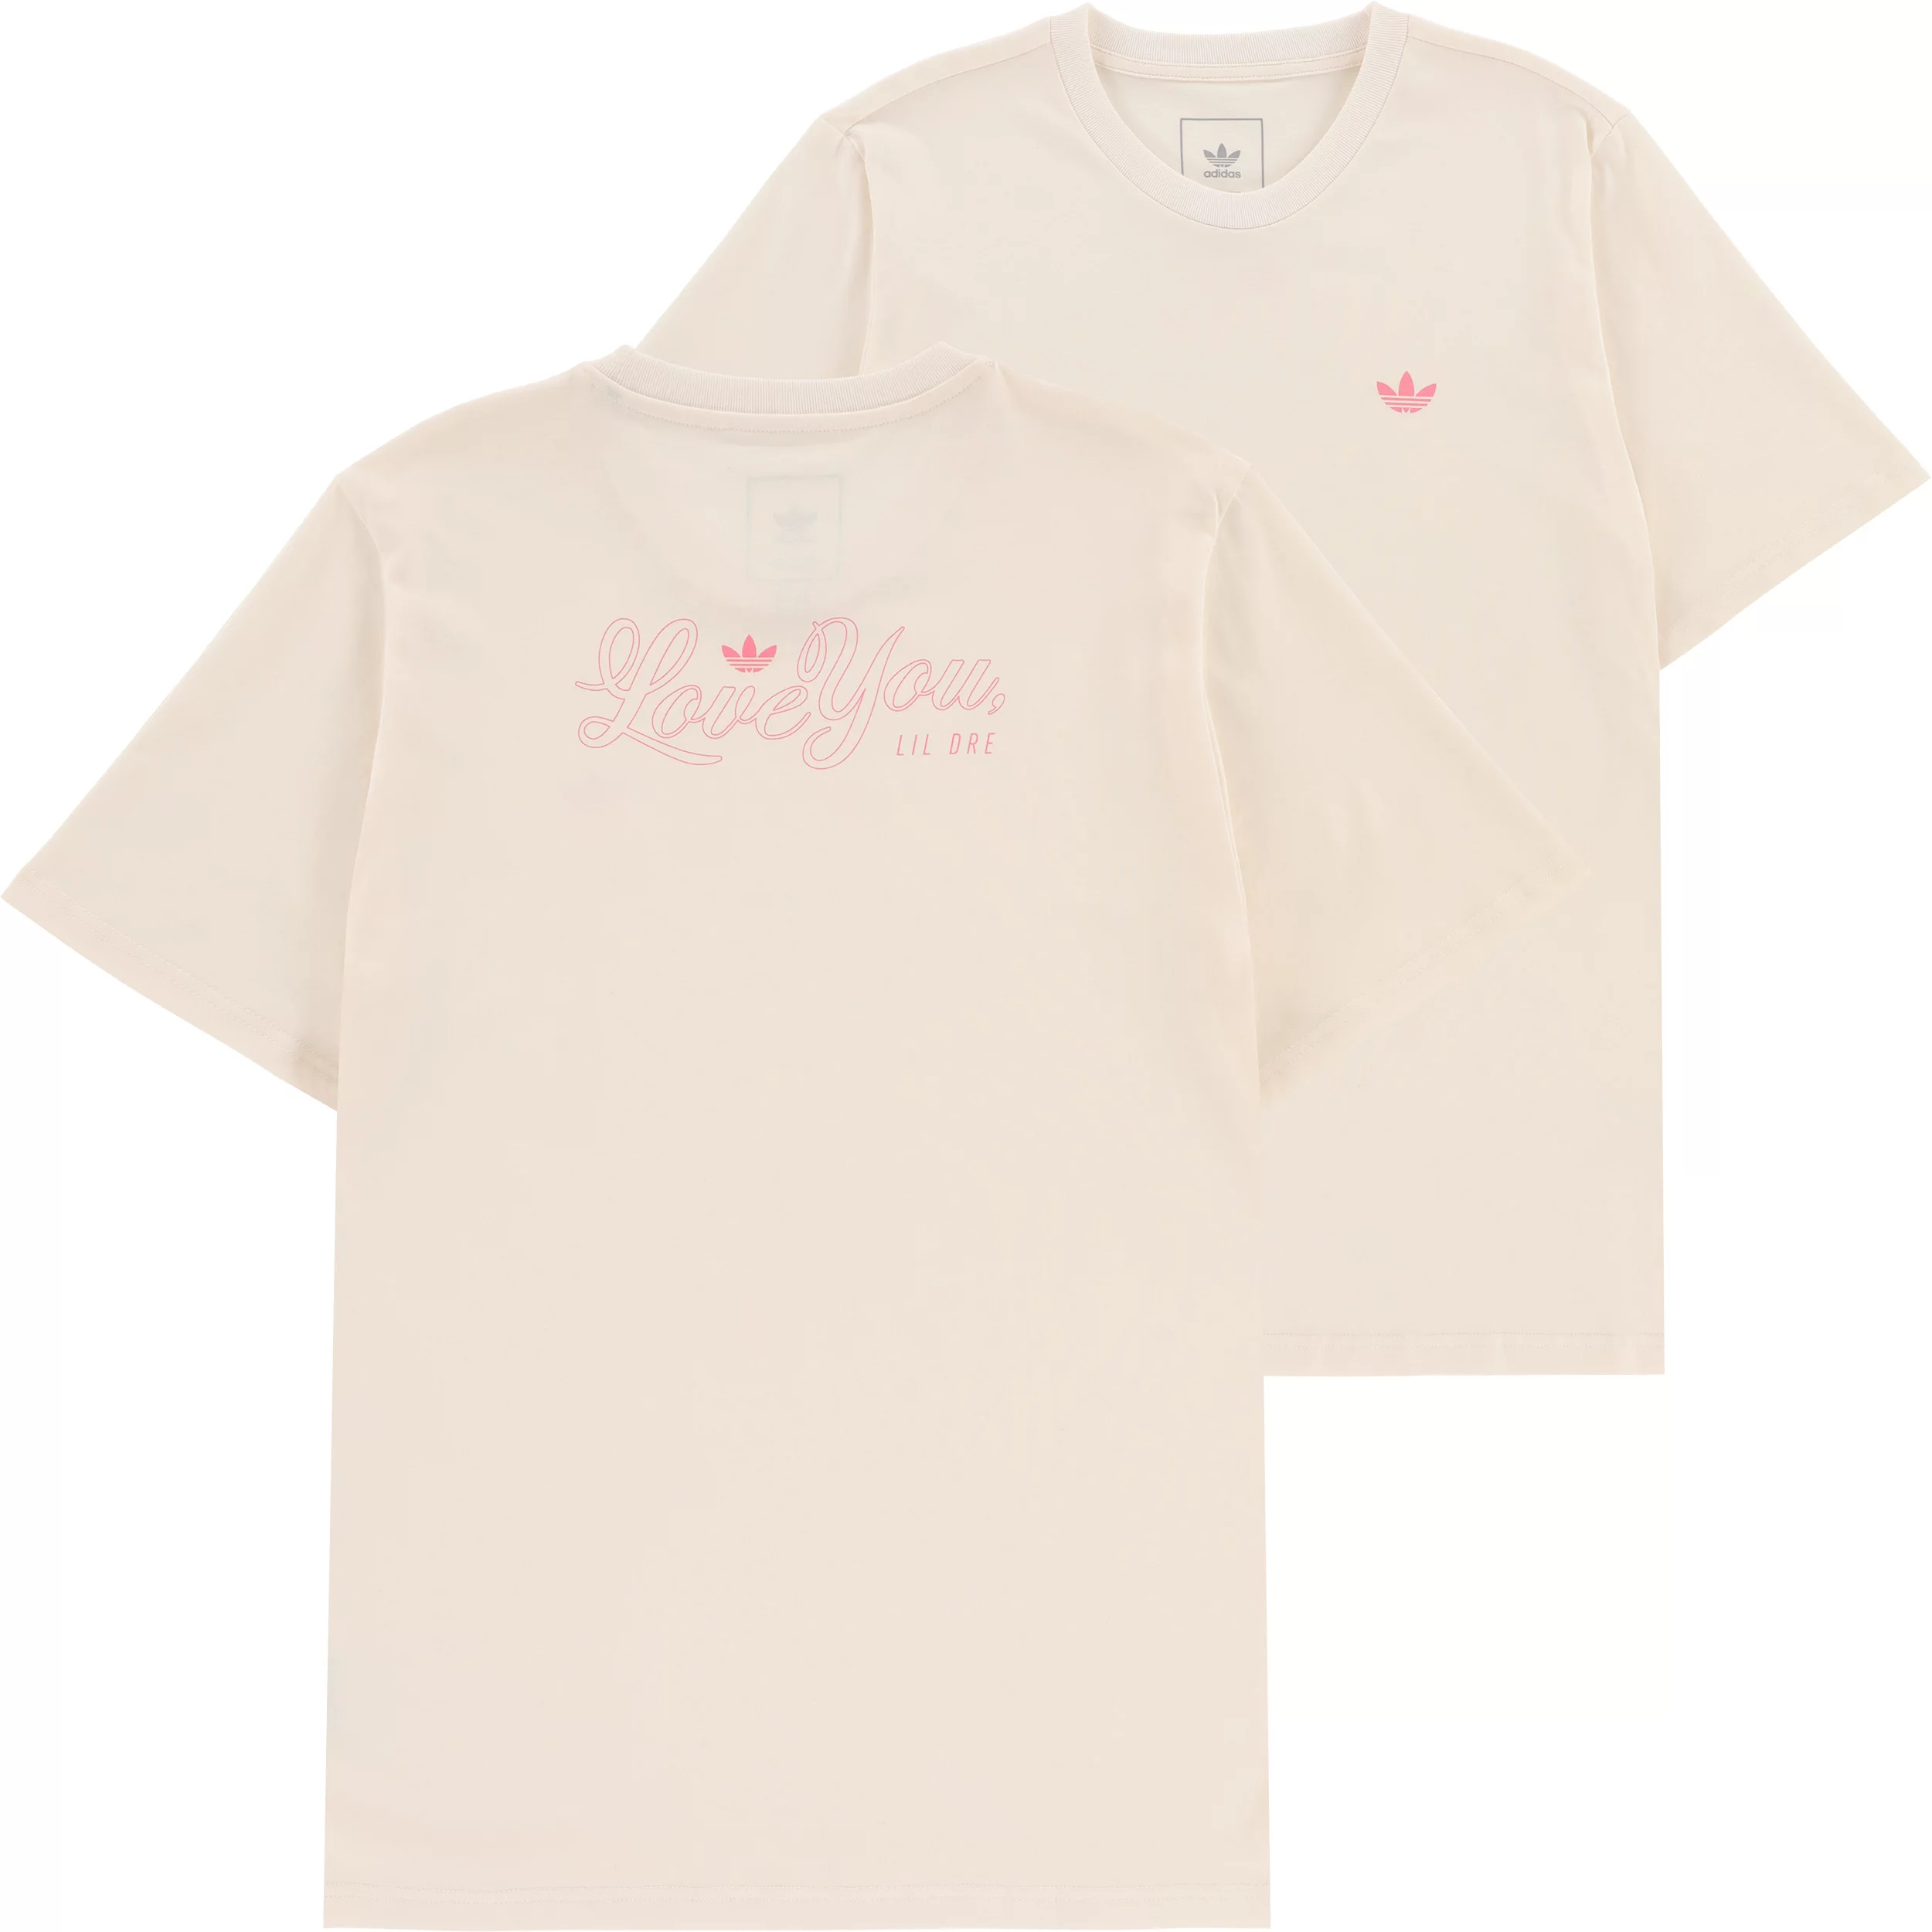 Adidas Lil white/bliss T-Shirt chalk Tactics | Message pink Dre 